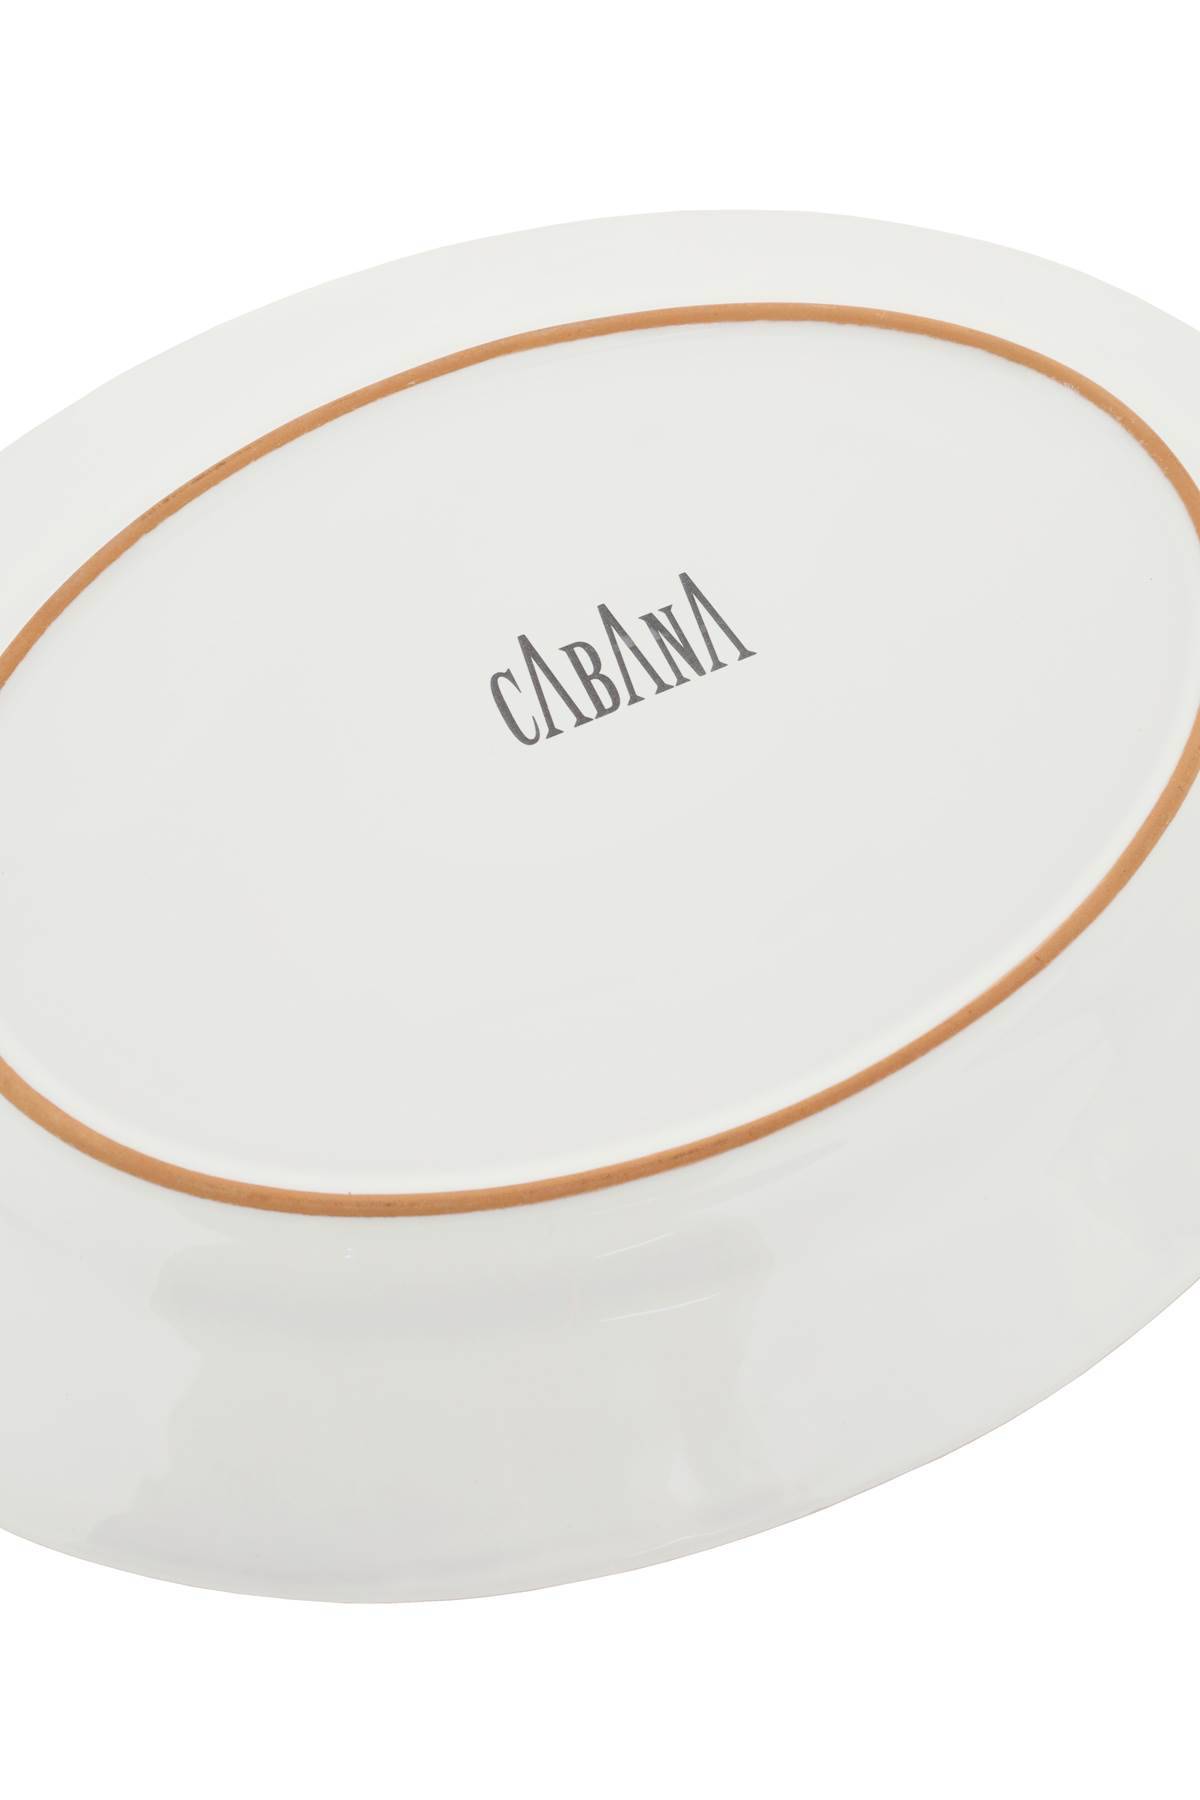 CABANA CABANA blossom oval serving plate